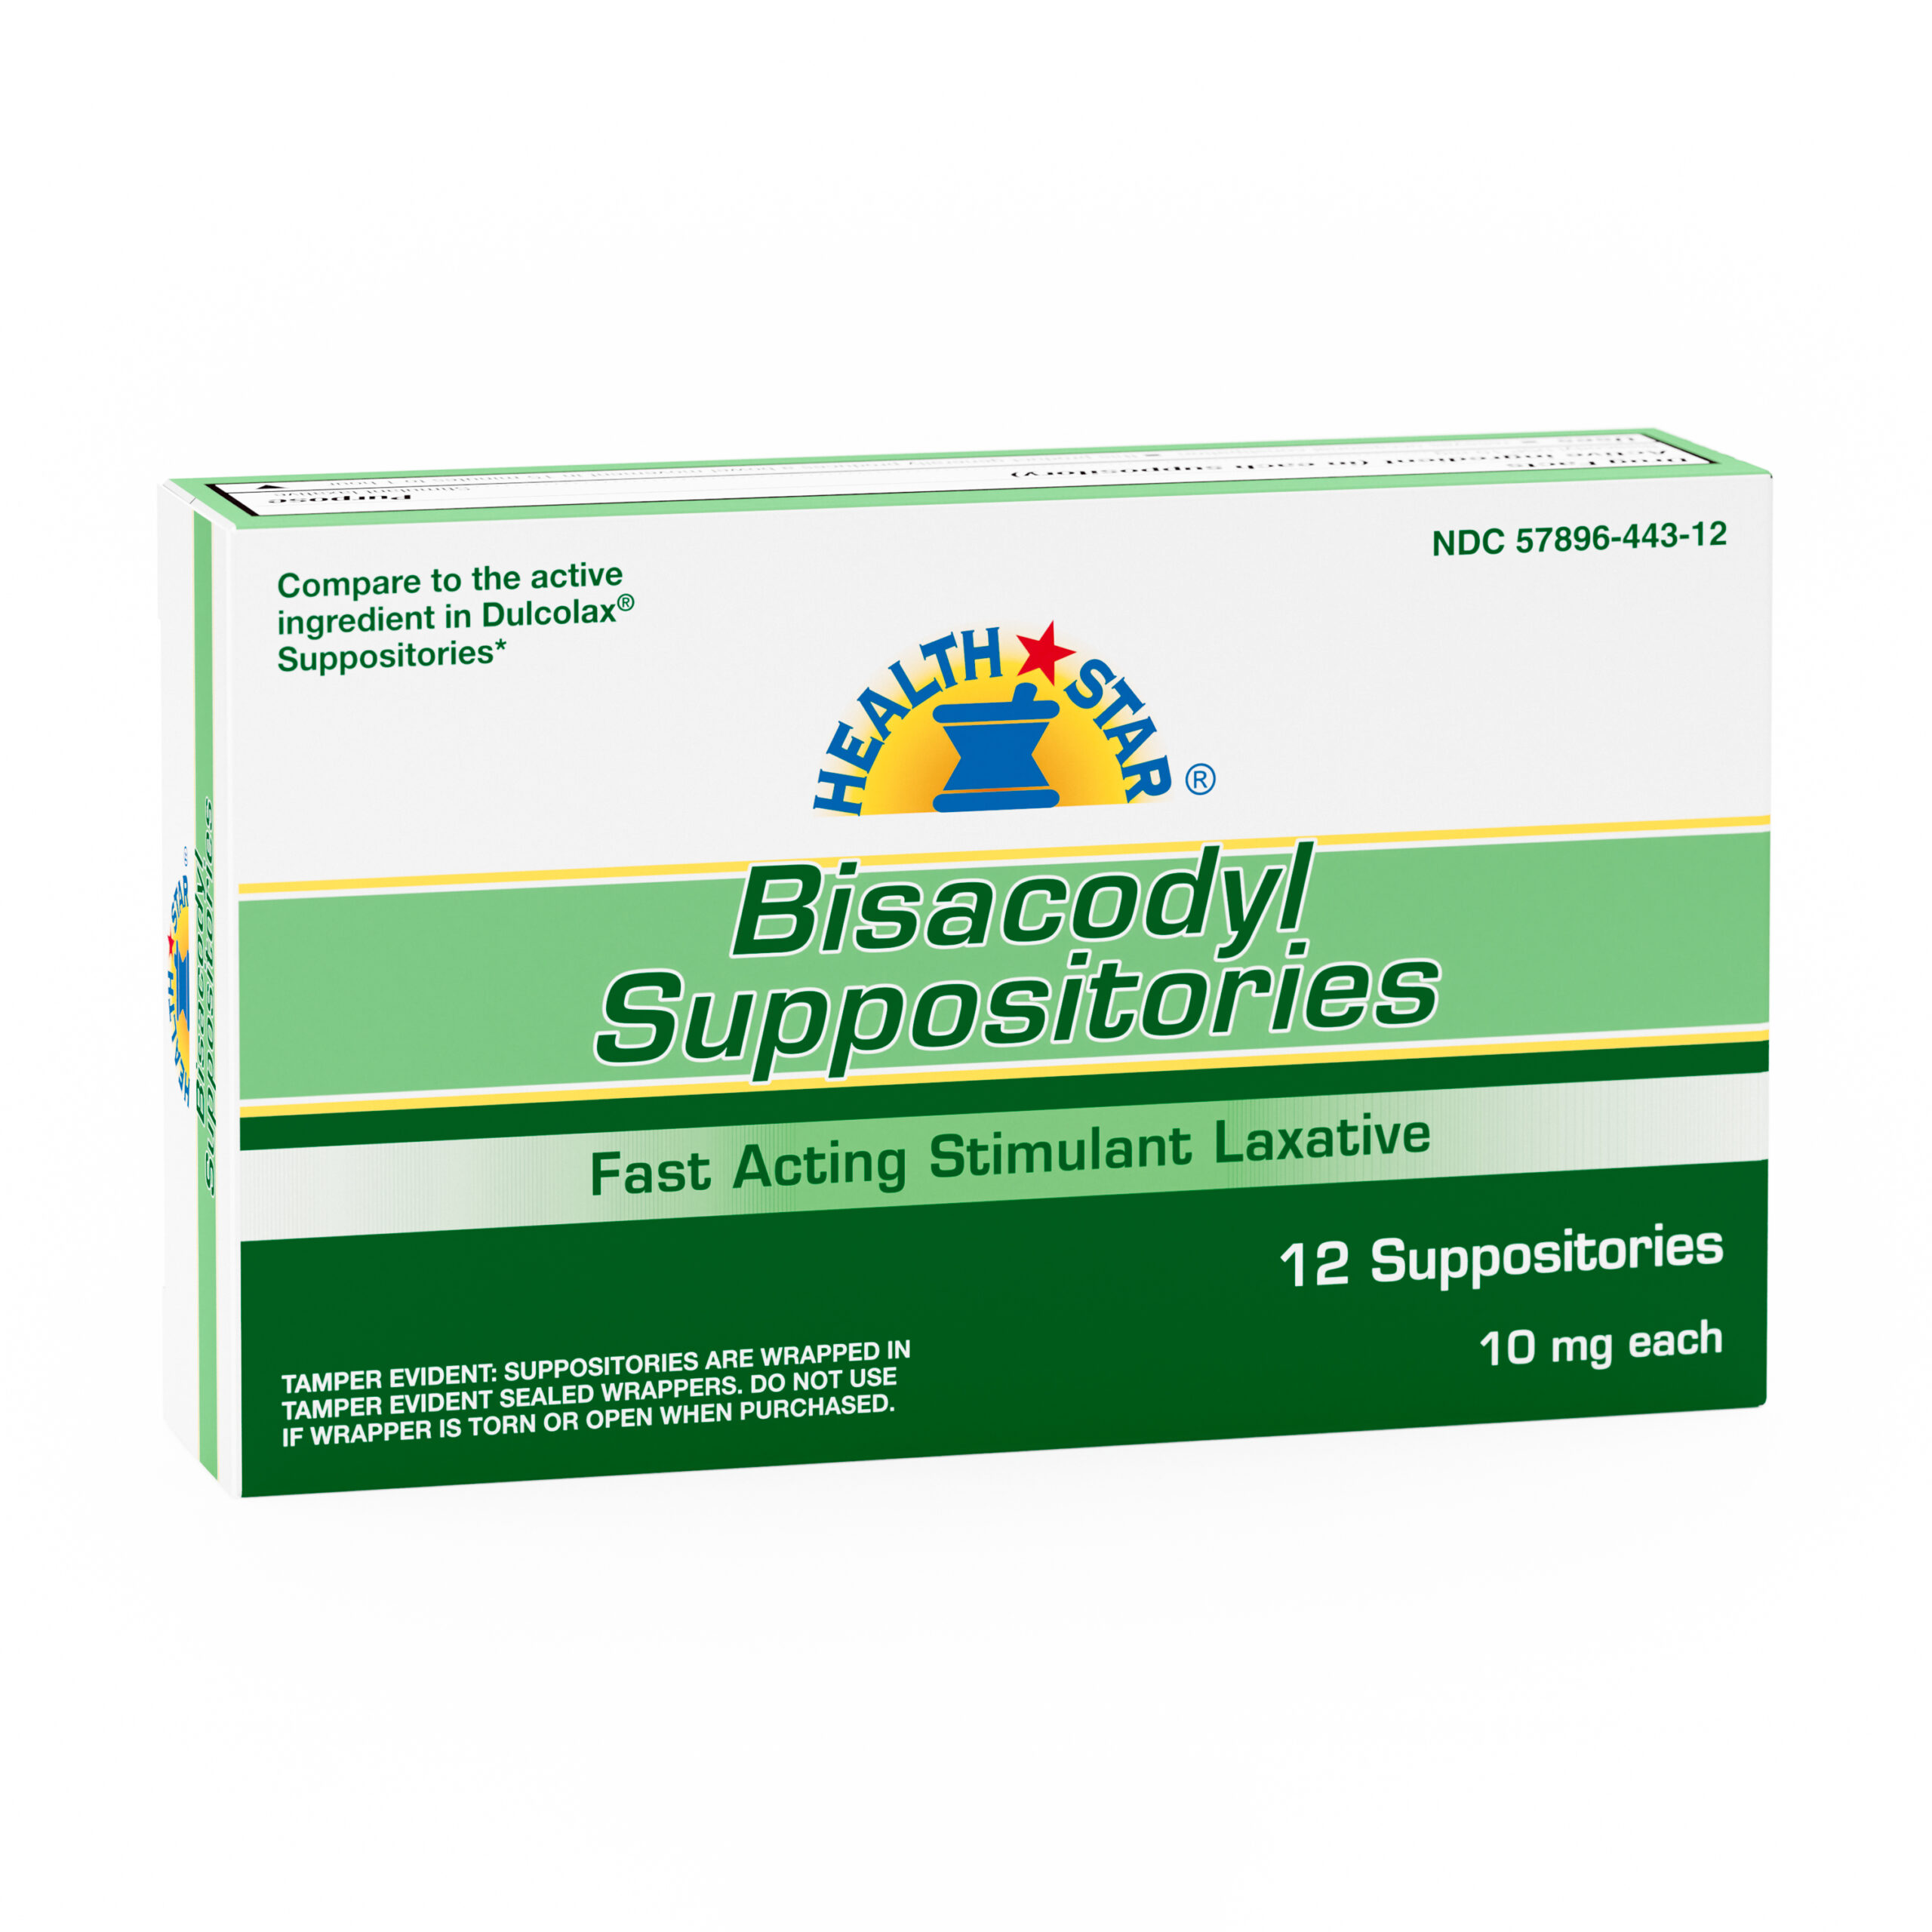 Bisacodyl 10mg – 12 Suppositories